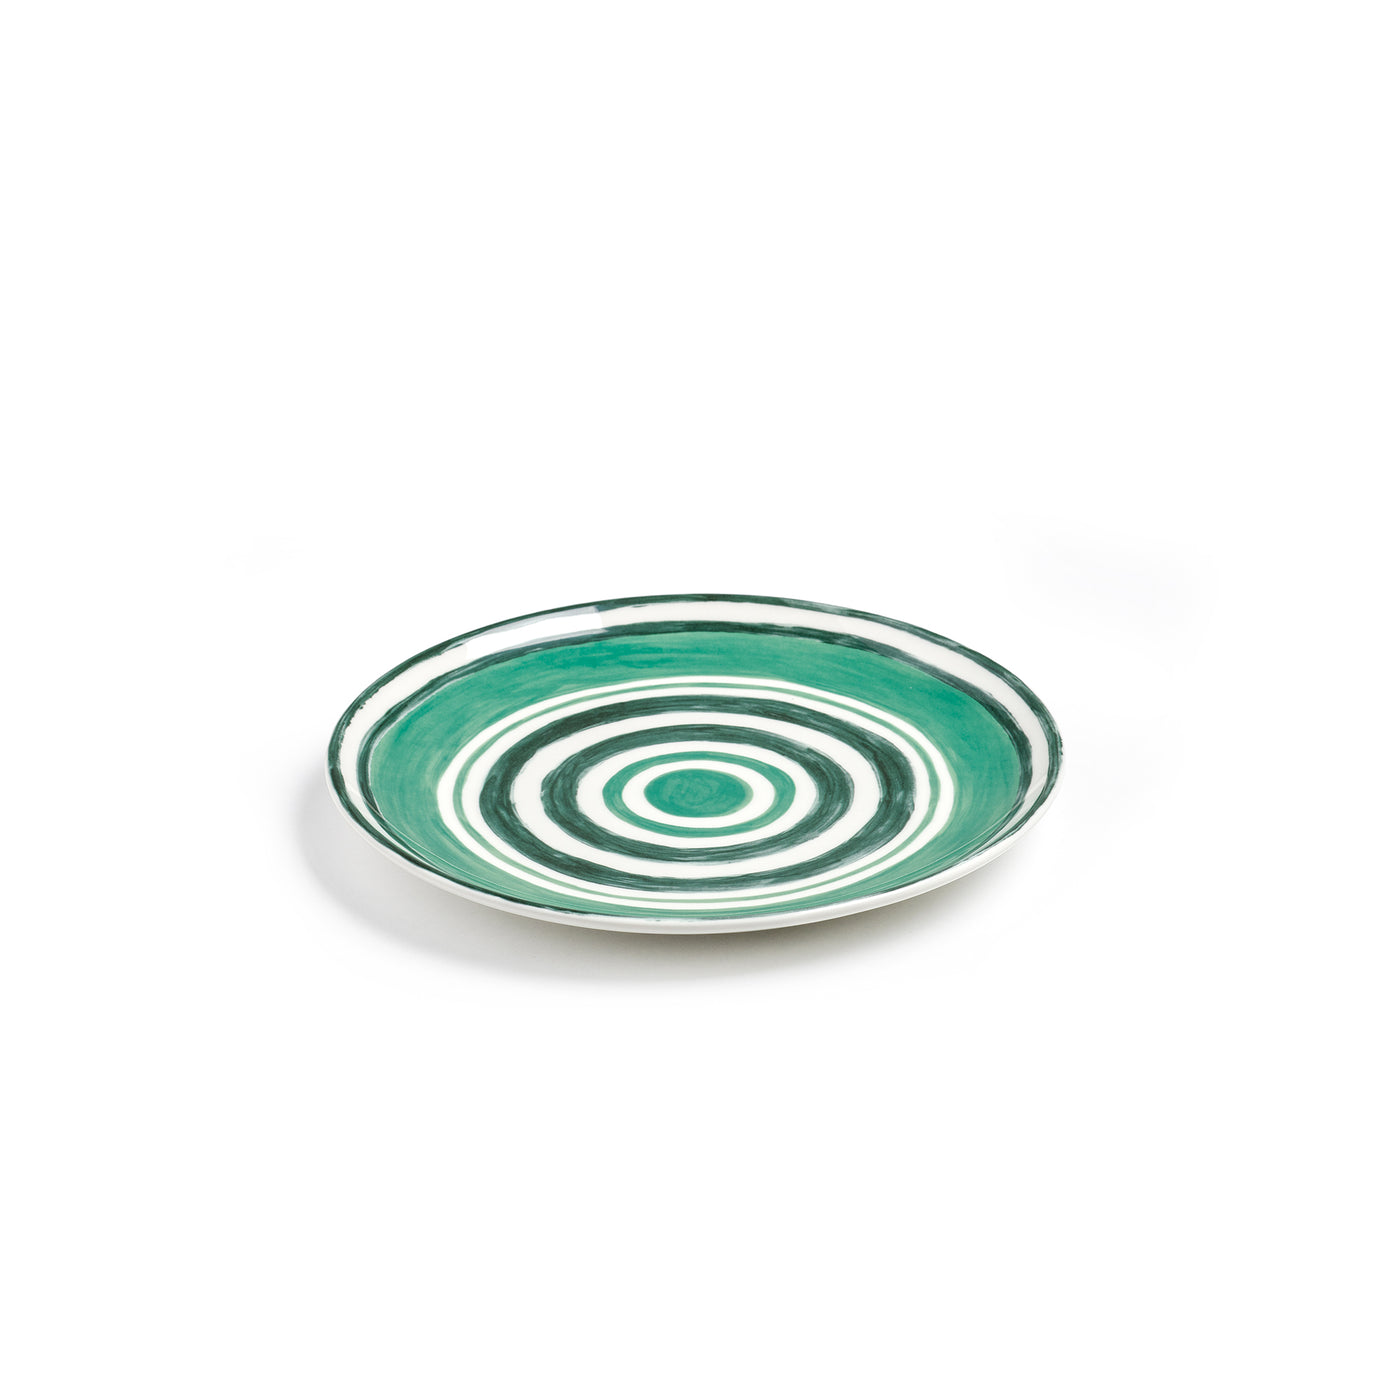 Maze Dessert Plate in Green